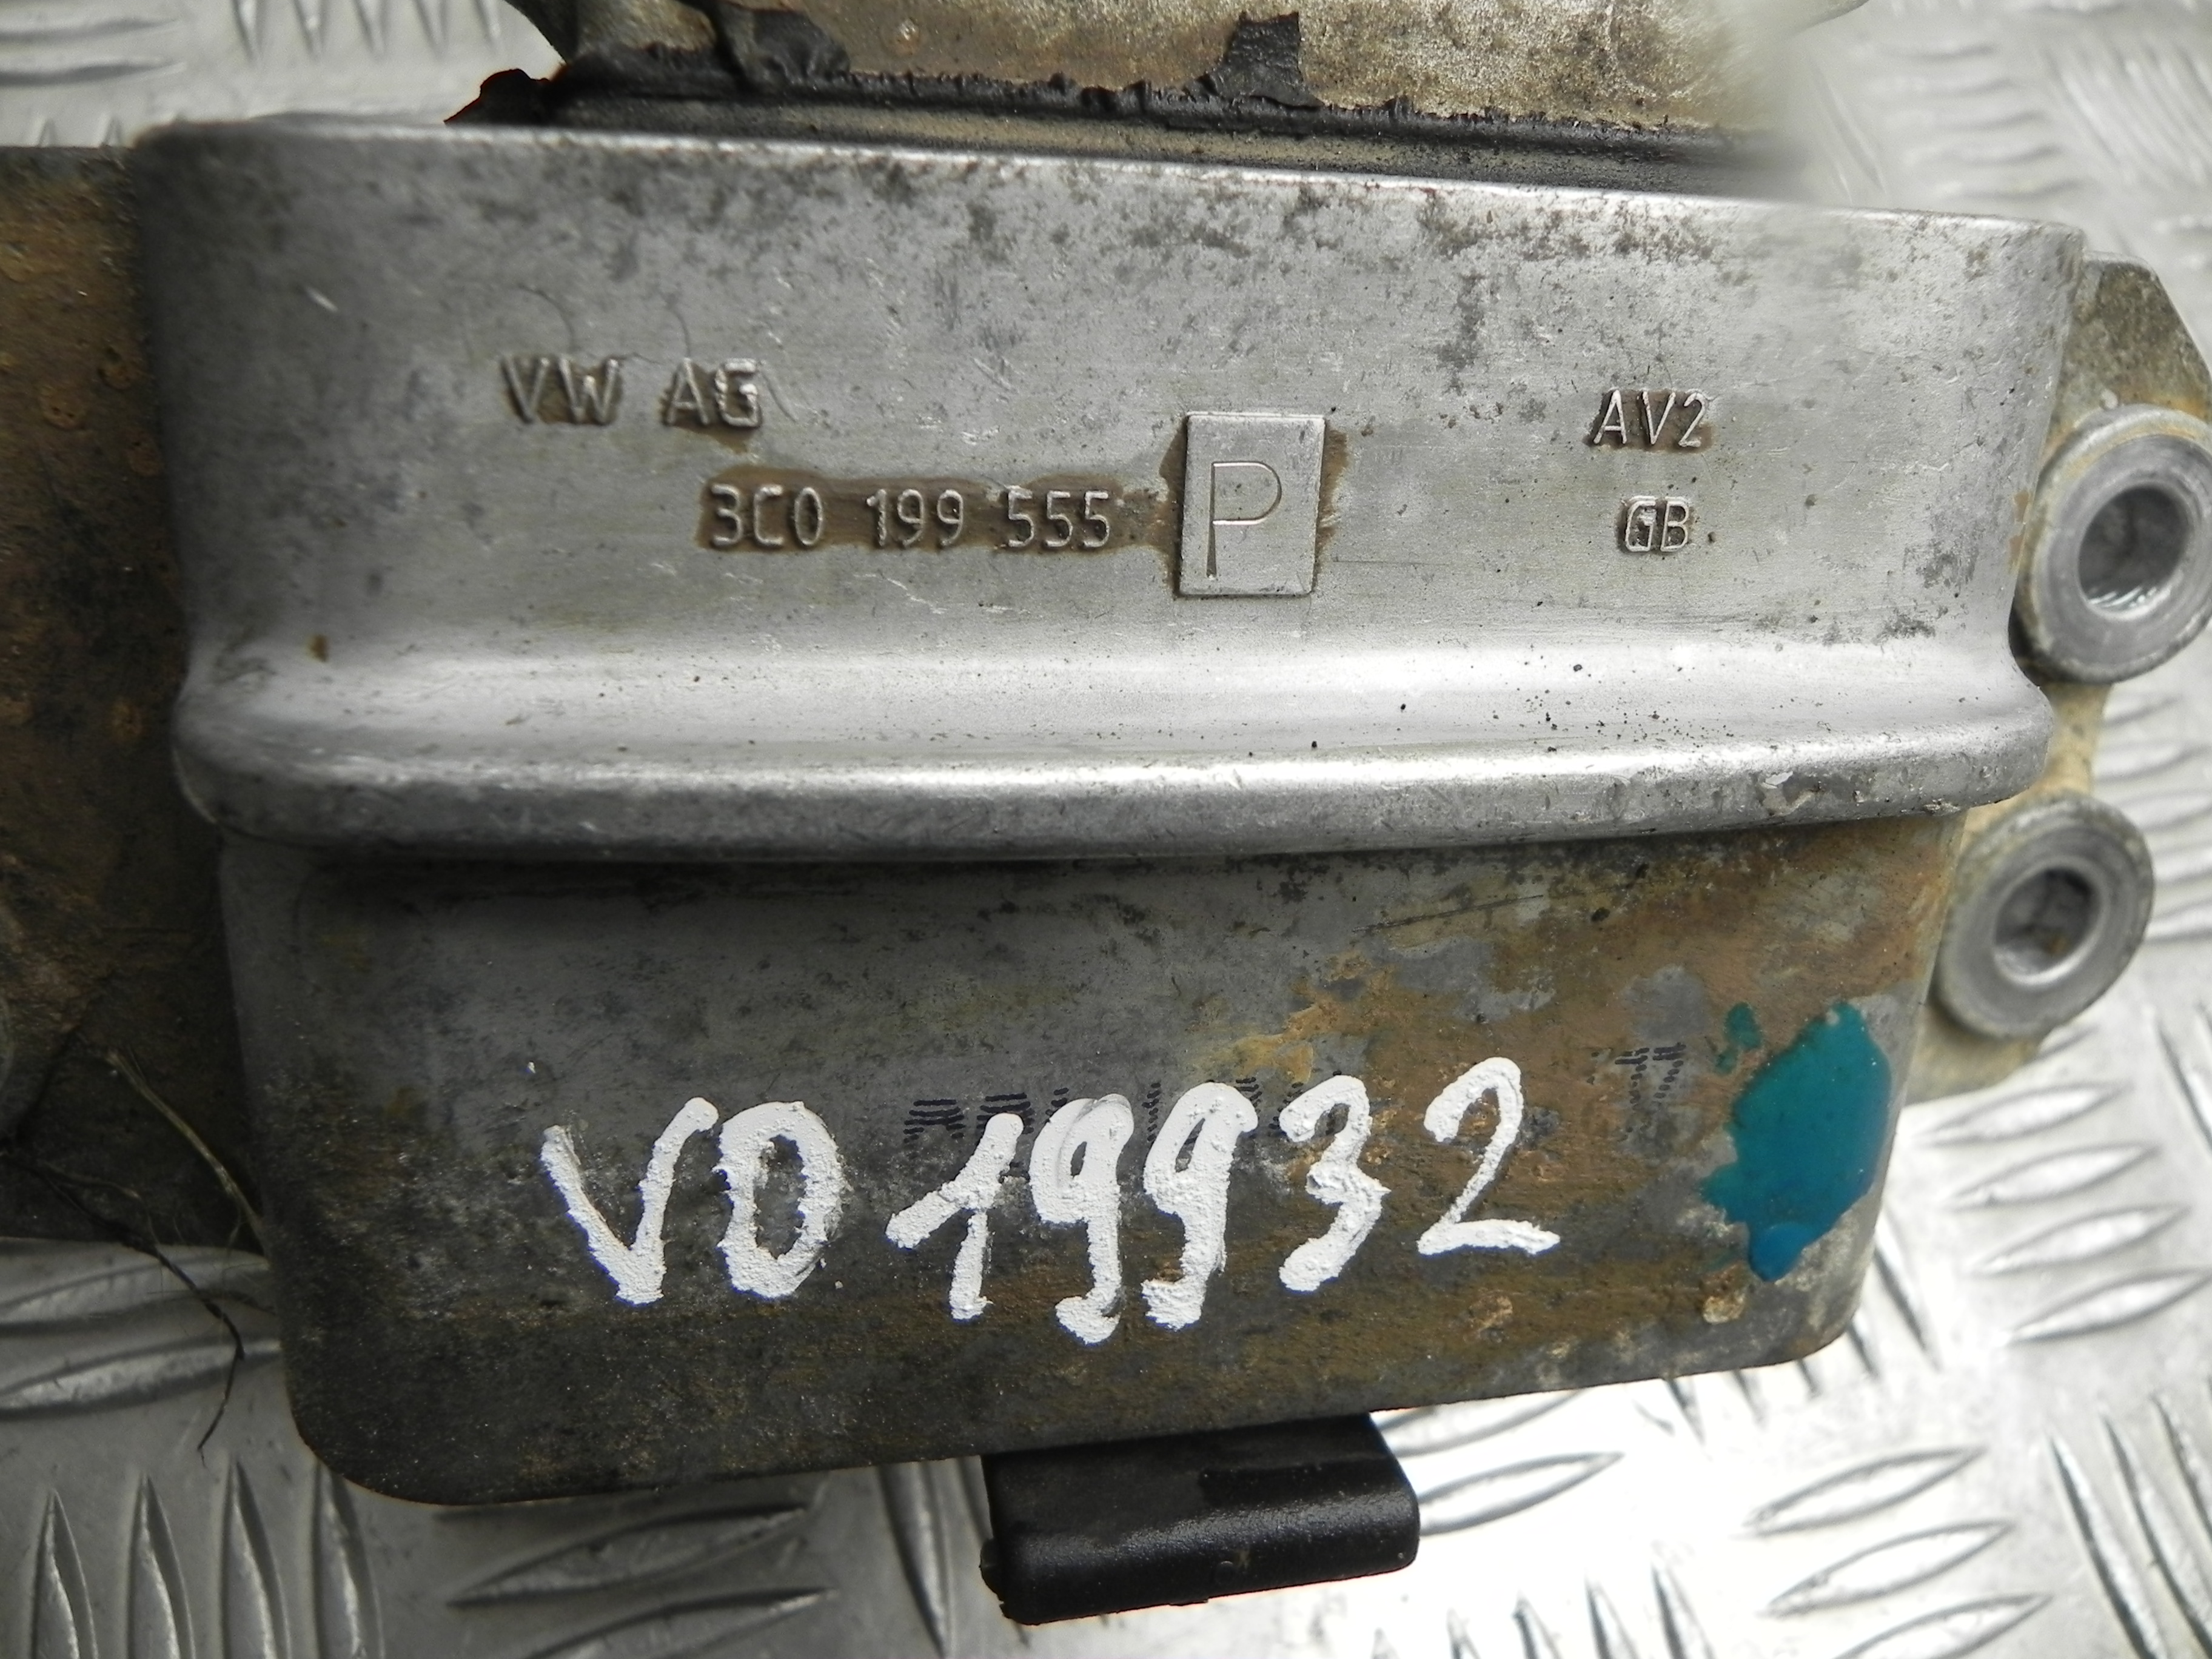 VOLKSWAGEN Passat B7 (2010-2015) Other Engine Compartment Parts 3C0199555P 23441695